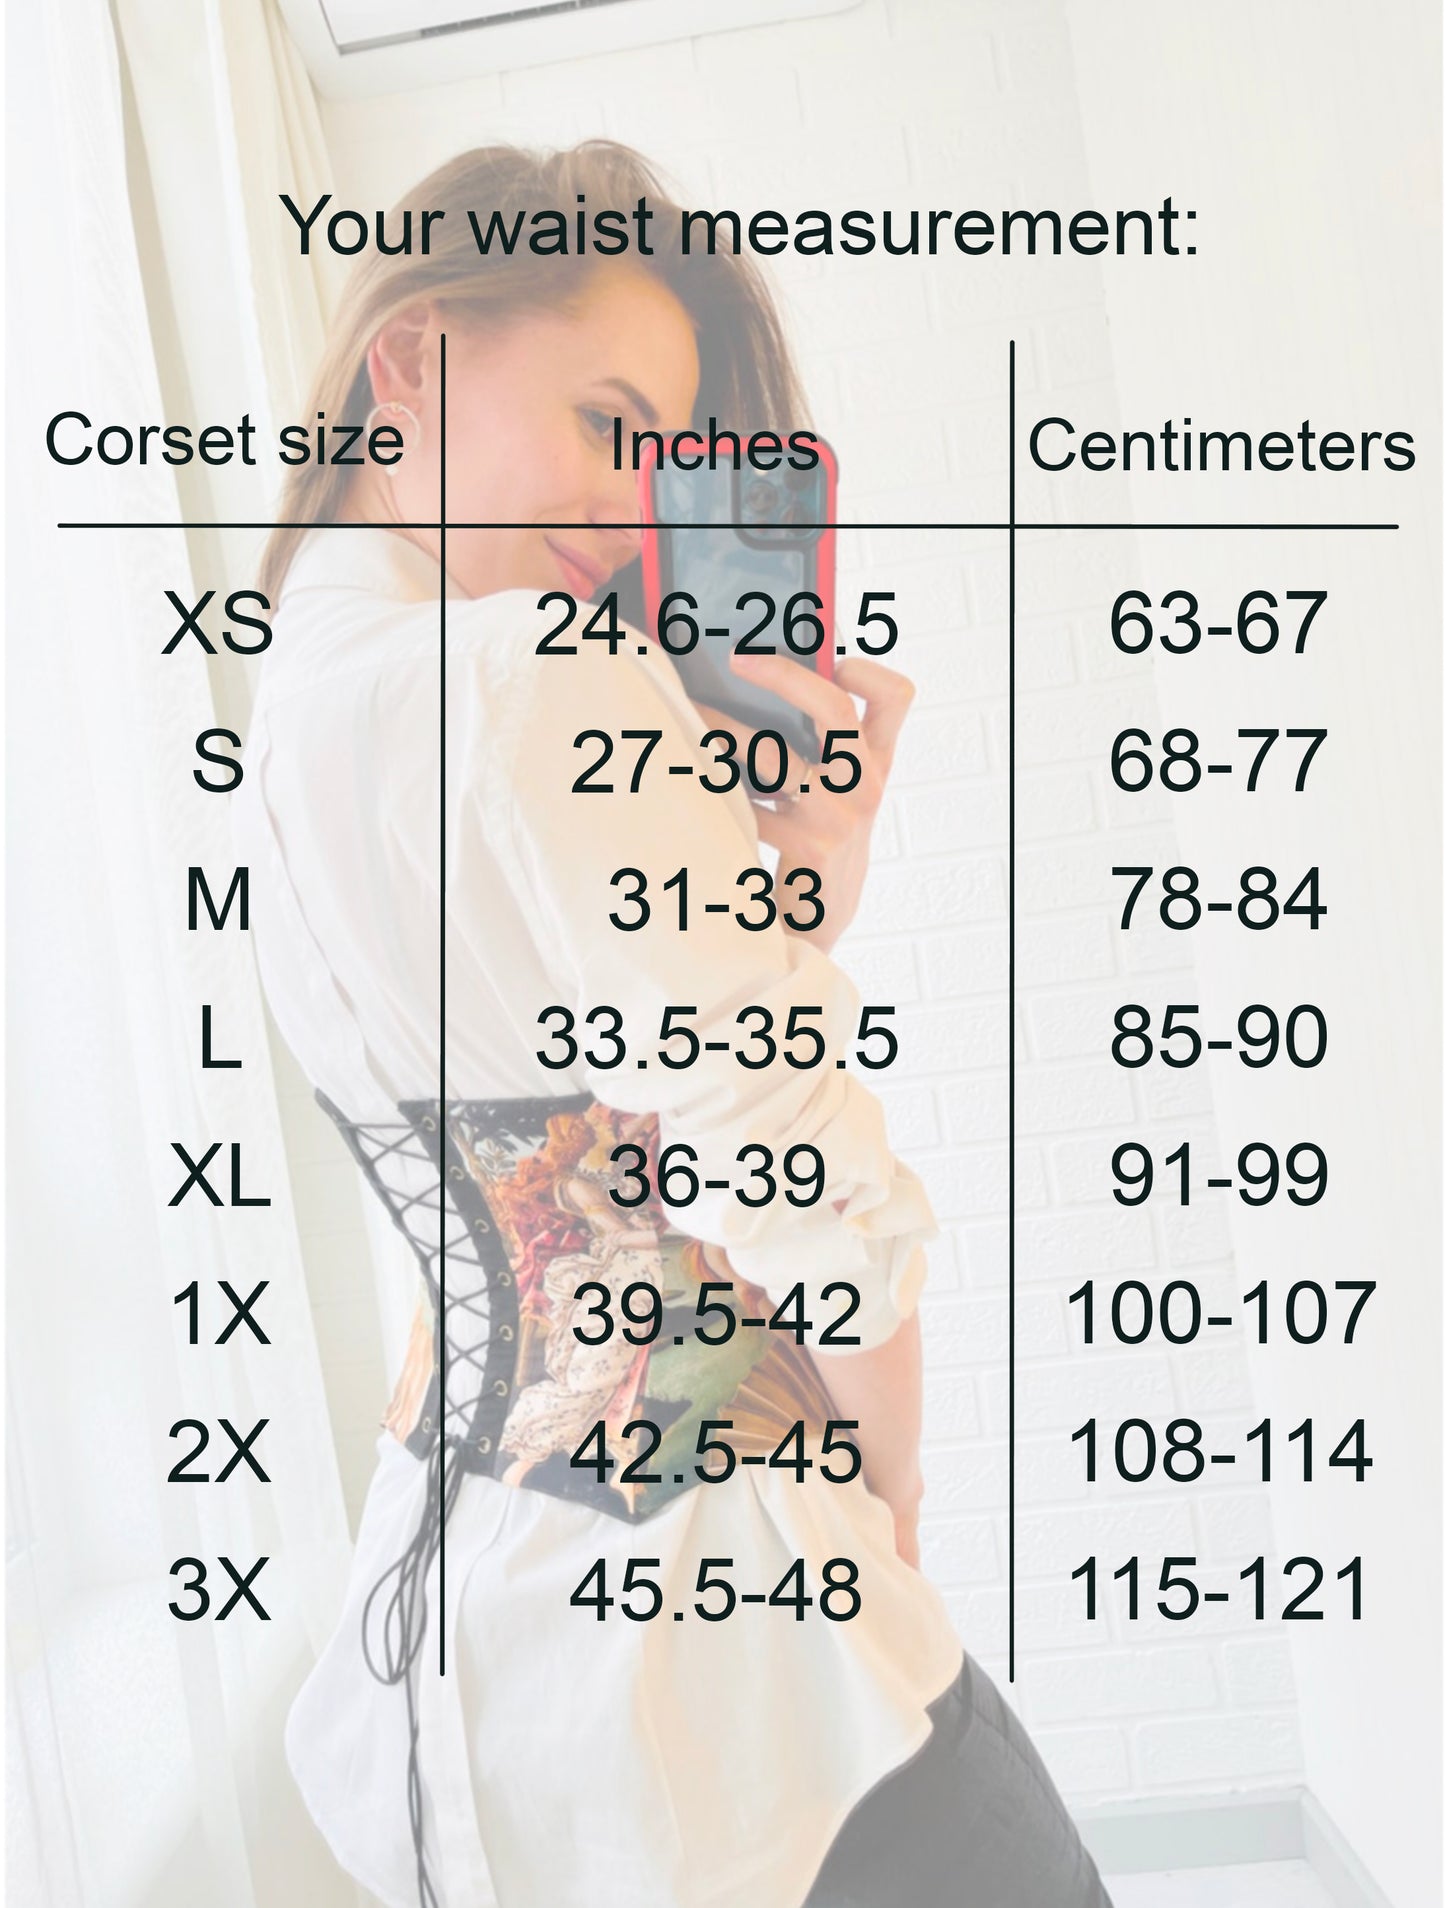 Corset size chart with waist measurement